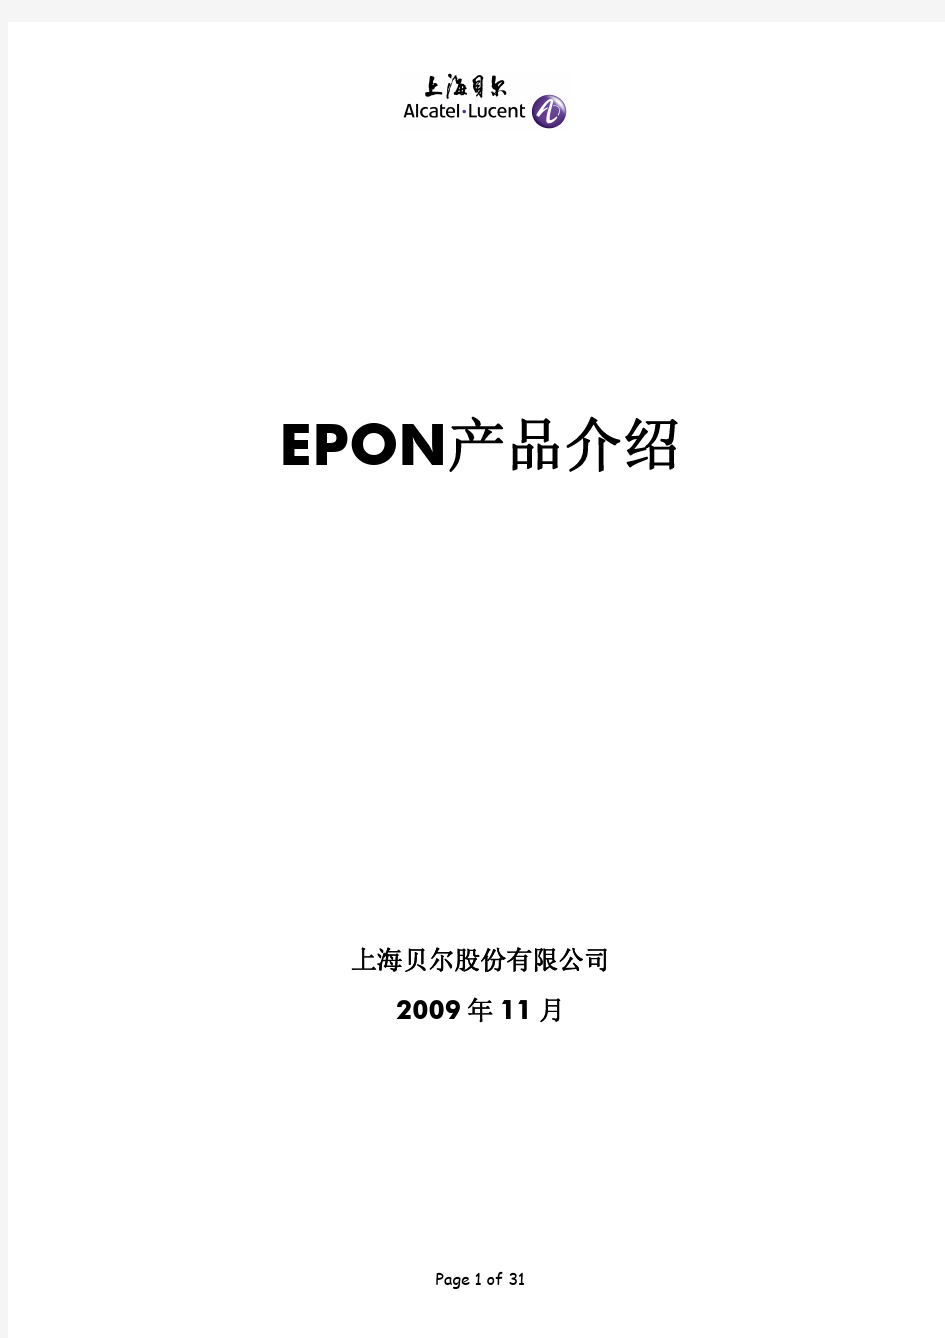 上海贝尔EPON产品介绍